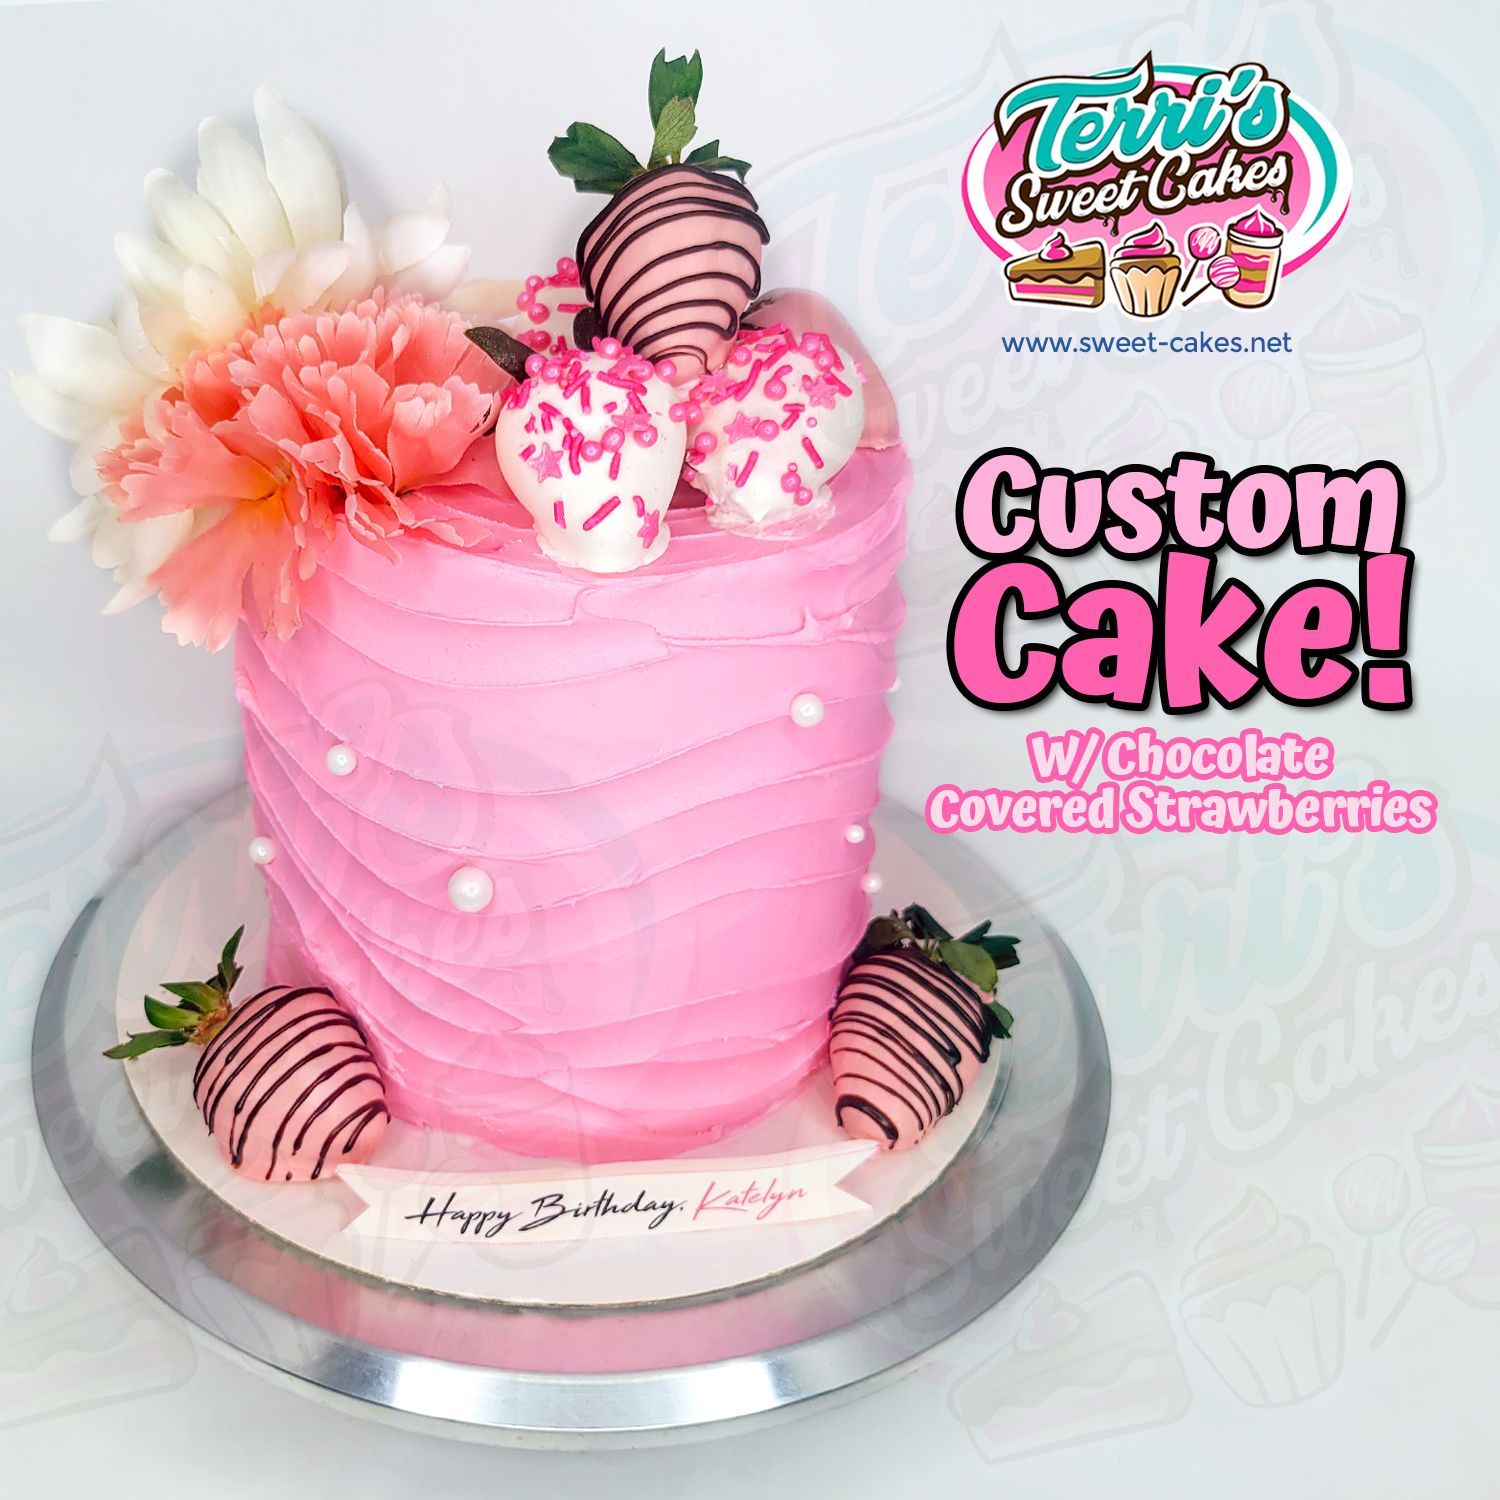 Rainbow Unicorn Cupcakes by Terri's Sweet Cakes!